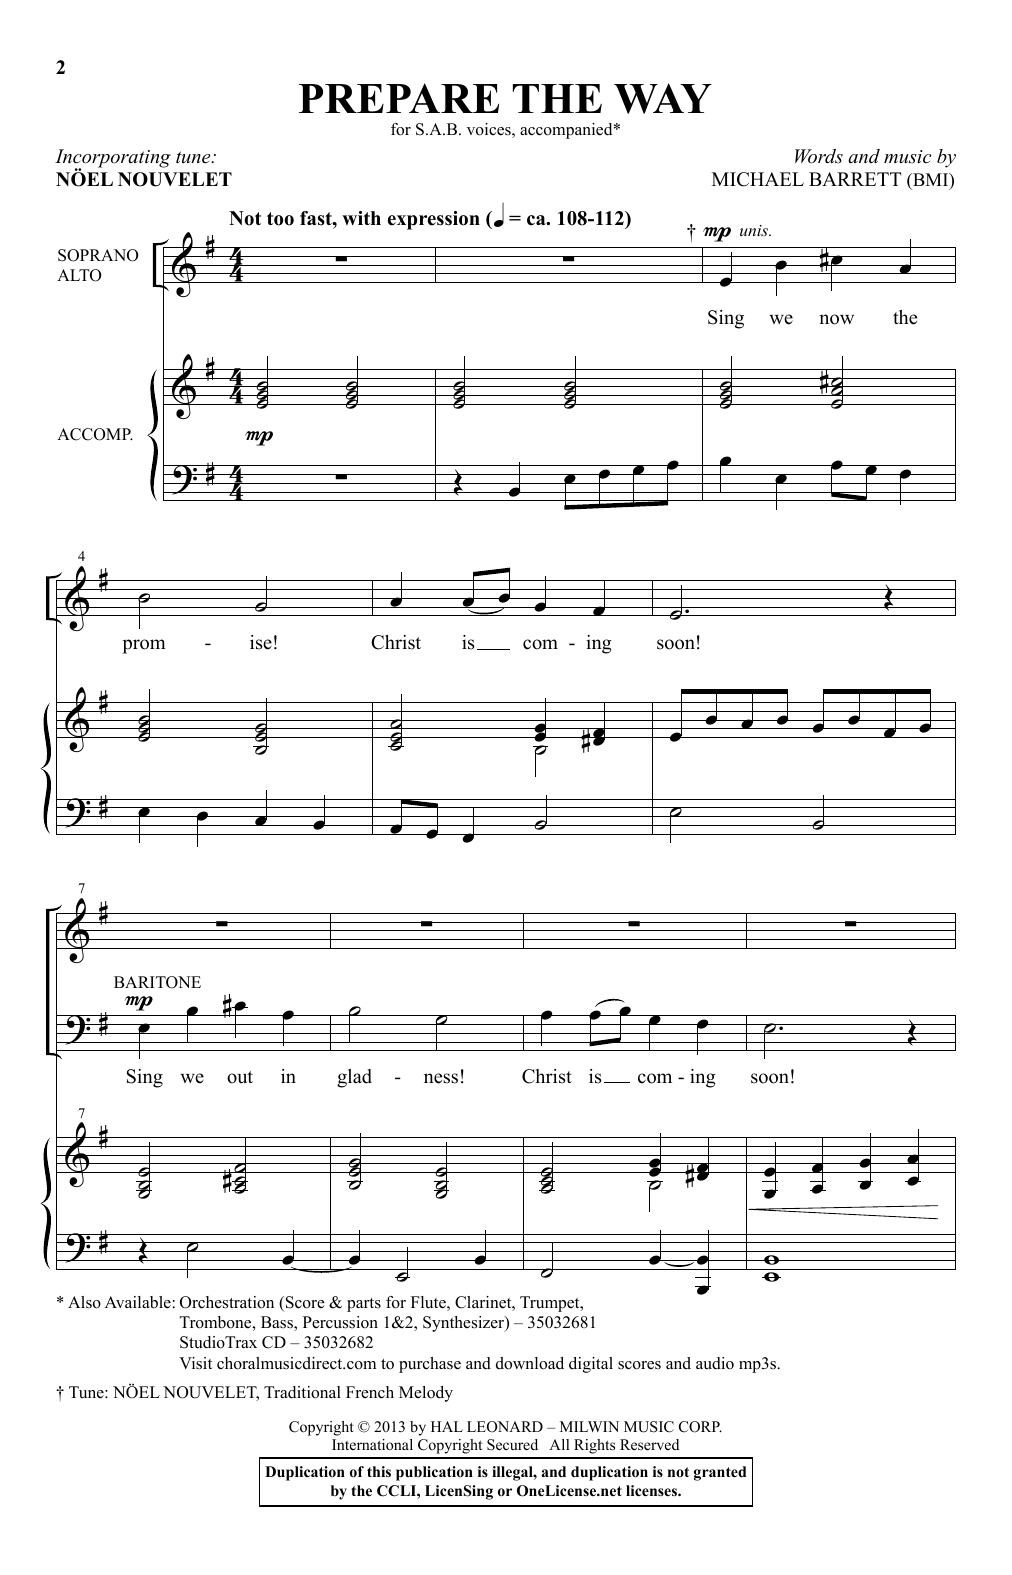 Michael Barrett Prepare The Way Sheet Music Notes & Chords for SAB Choir - Download or Print PDF